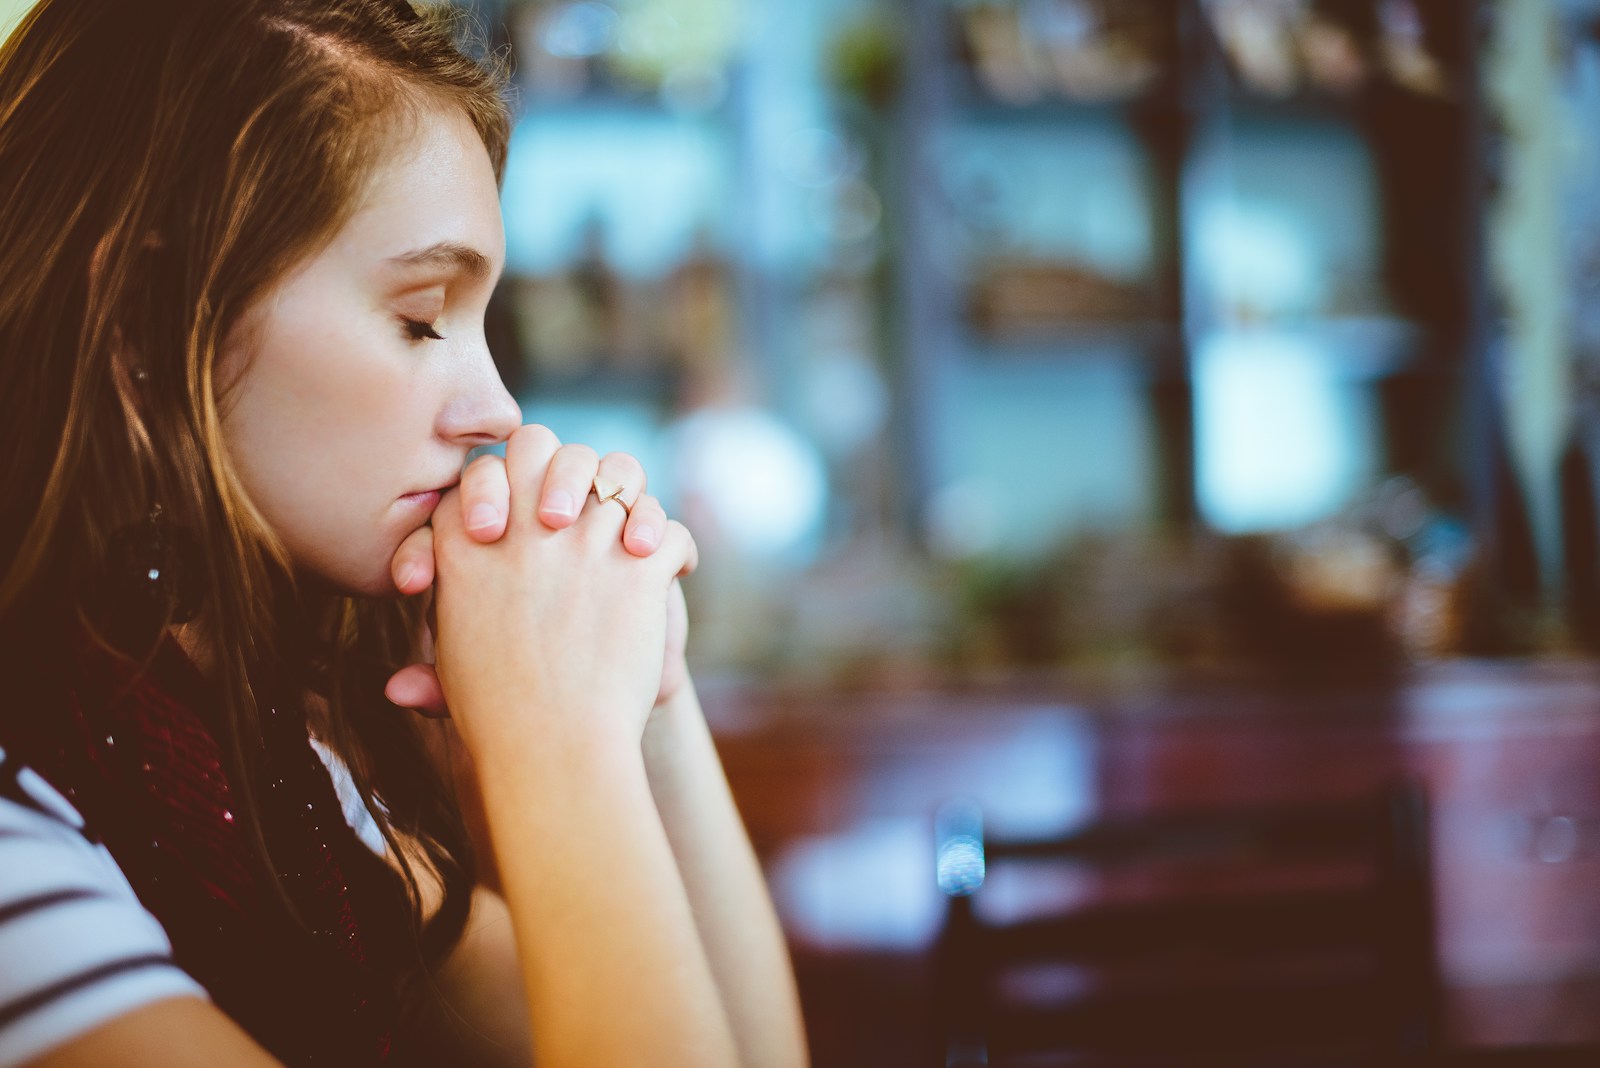 woman praying - anxiety treatment